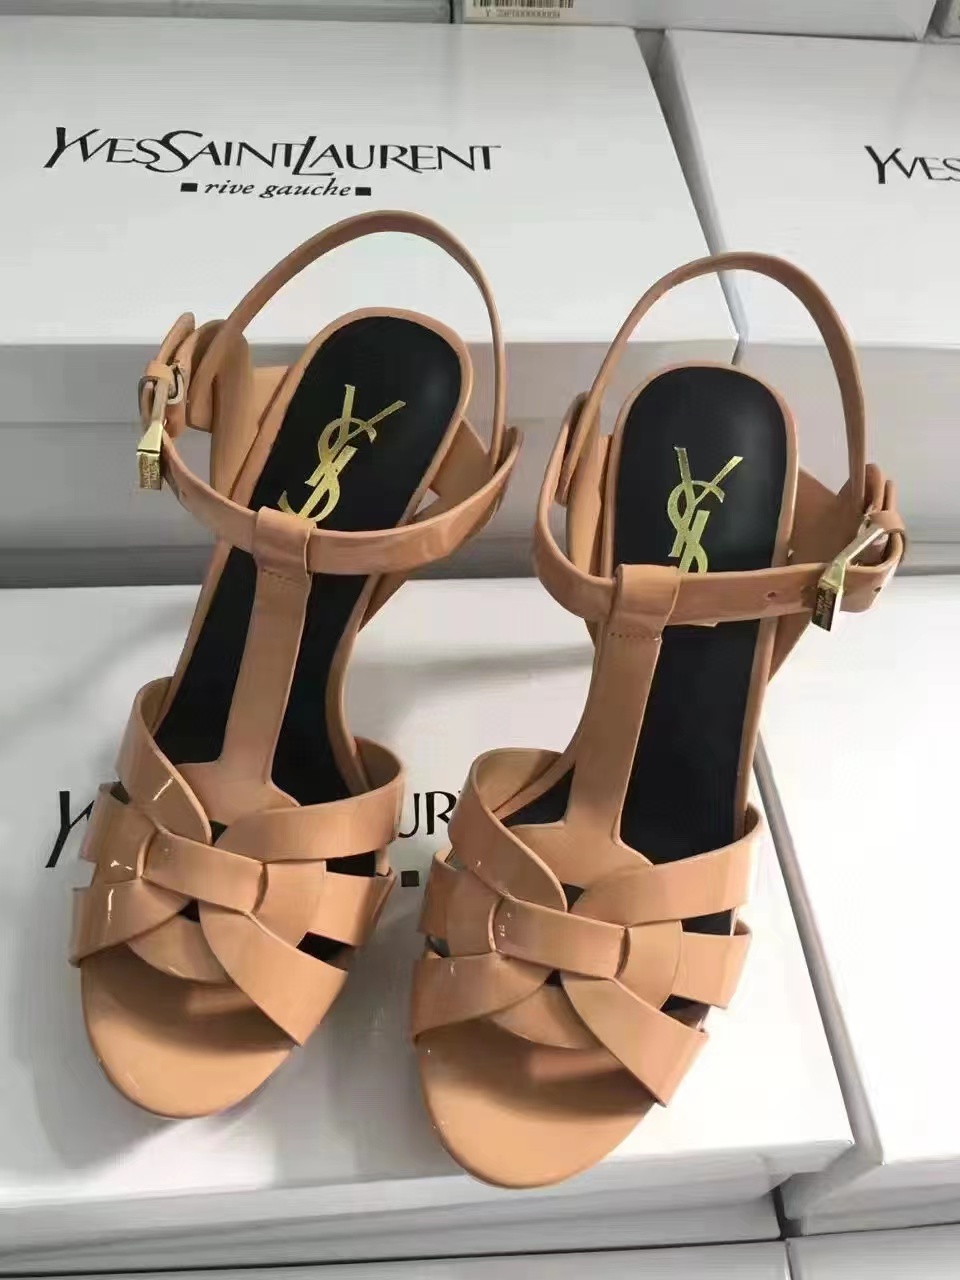 Yves saint Laurent Shoes YSL17112-4 10CM height